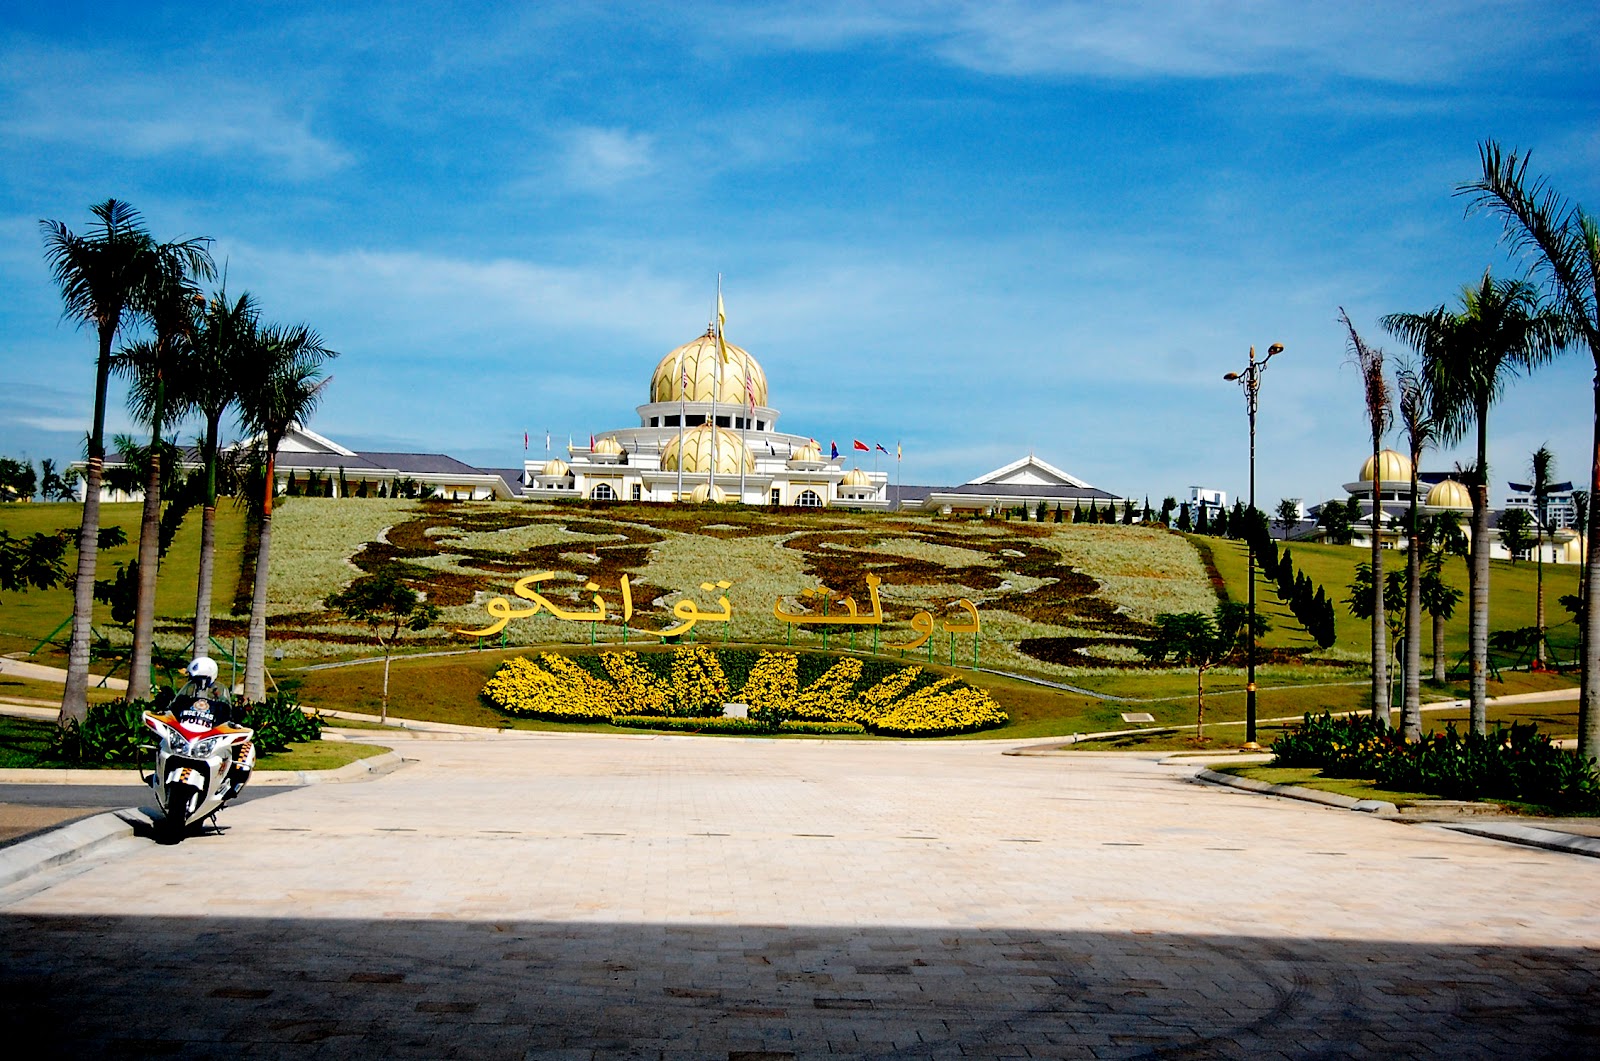 bowdywanders.com: The Istana Negara in Kuala Lumpur